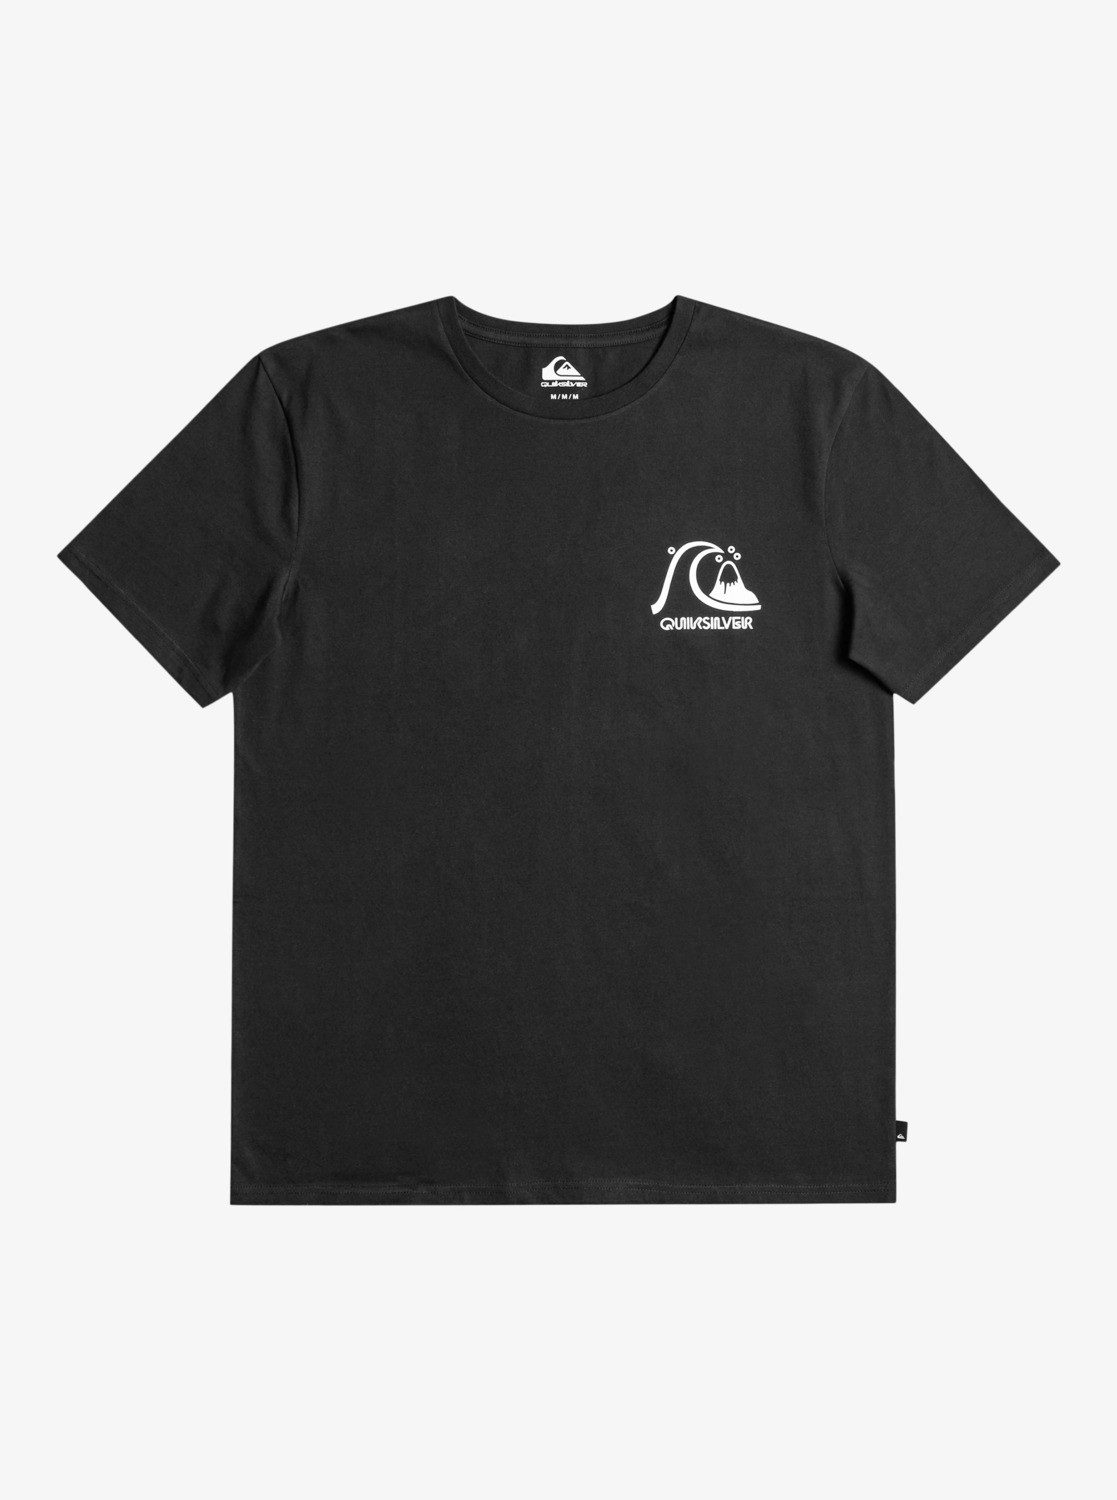 Original Quiksilver T-Shirt The Black